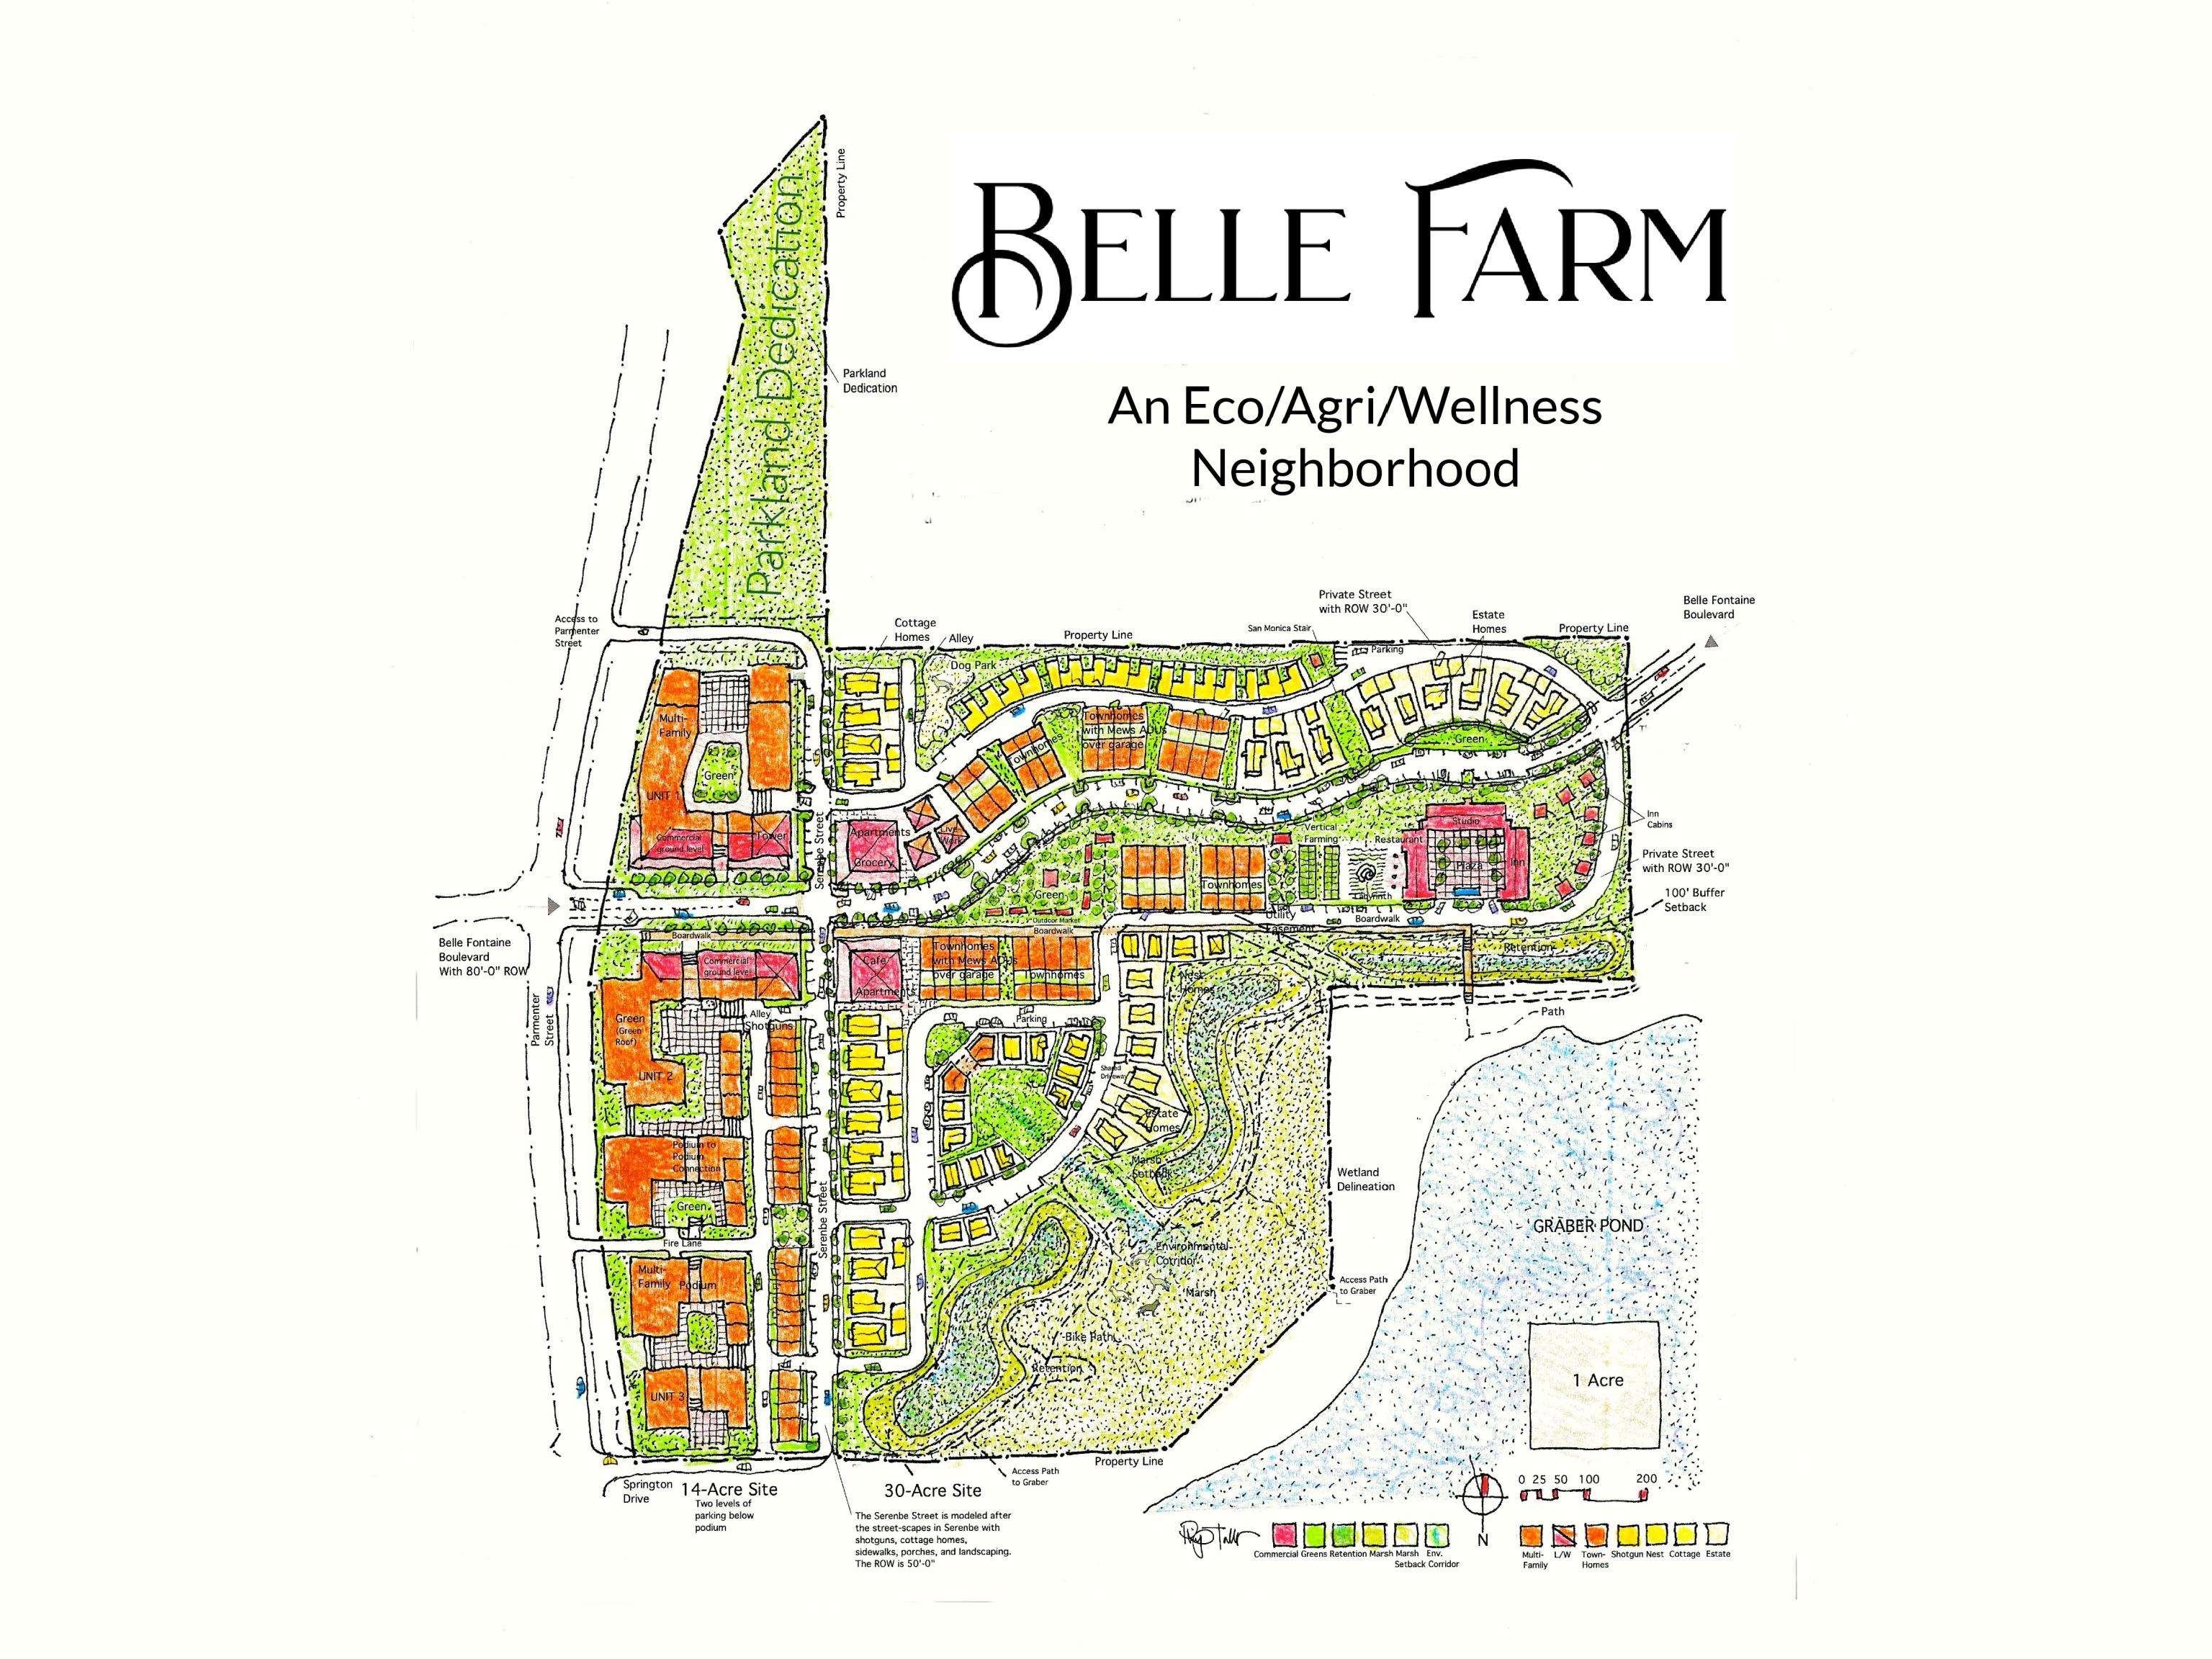 2. Lot 36 Belle Farm